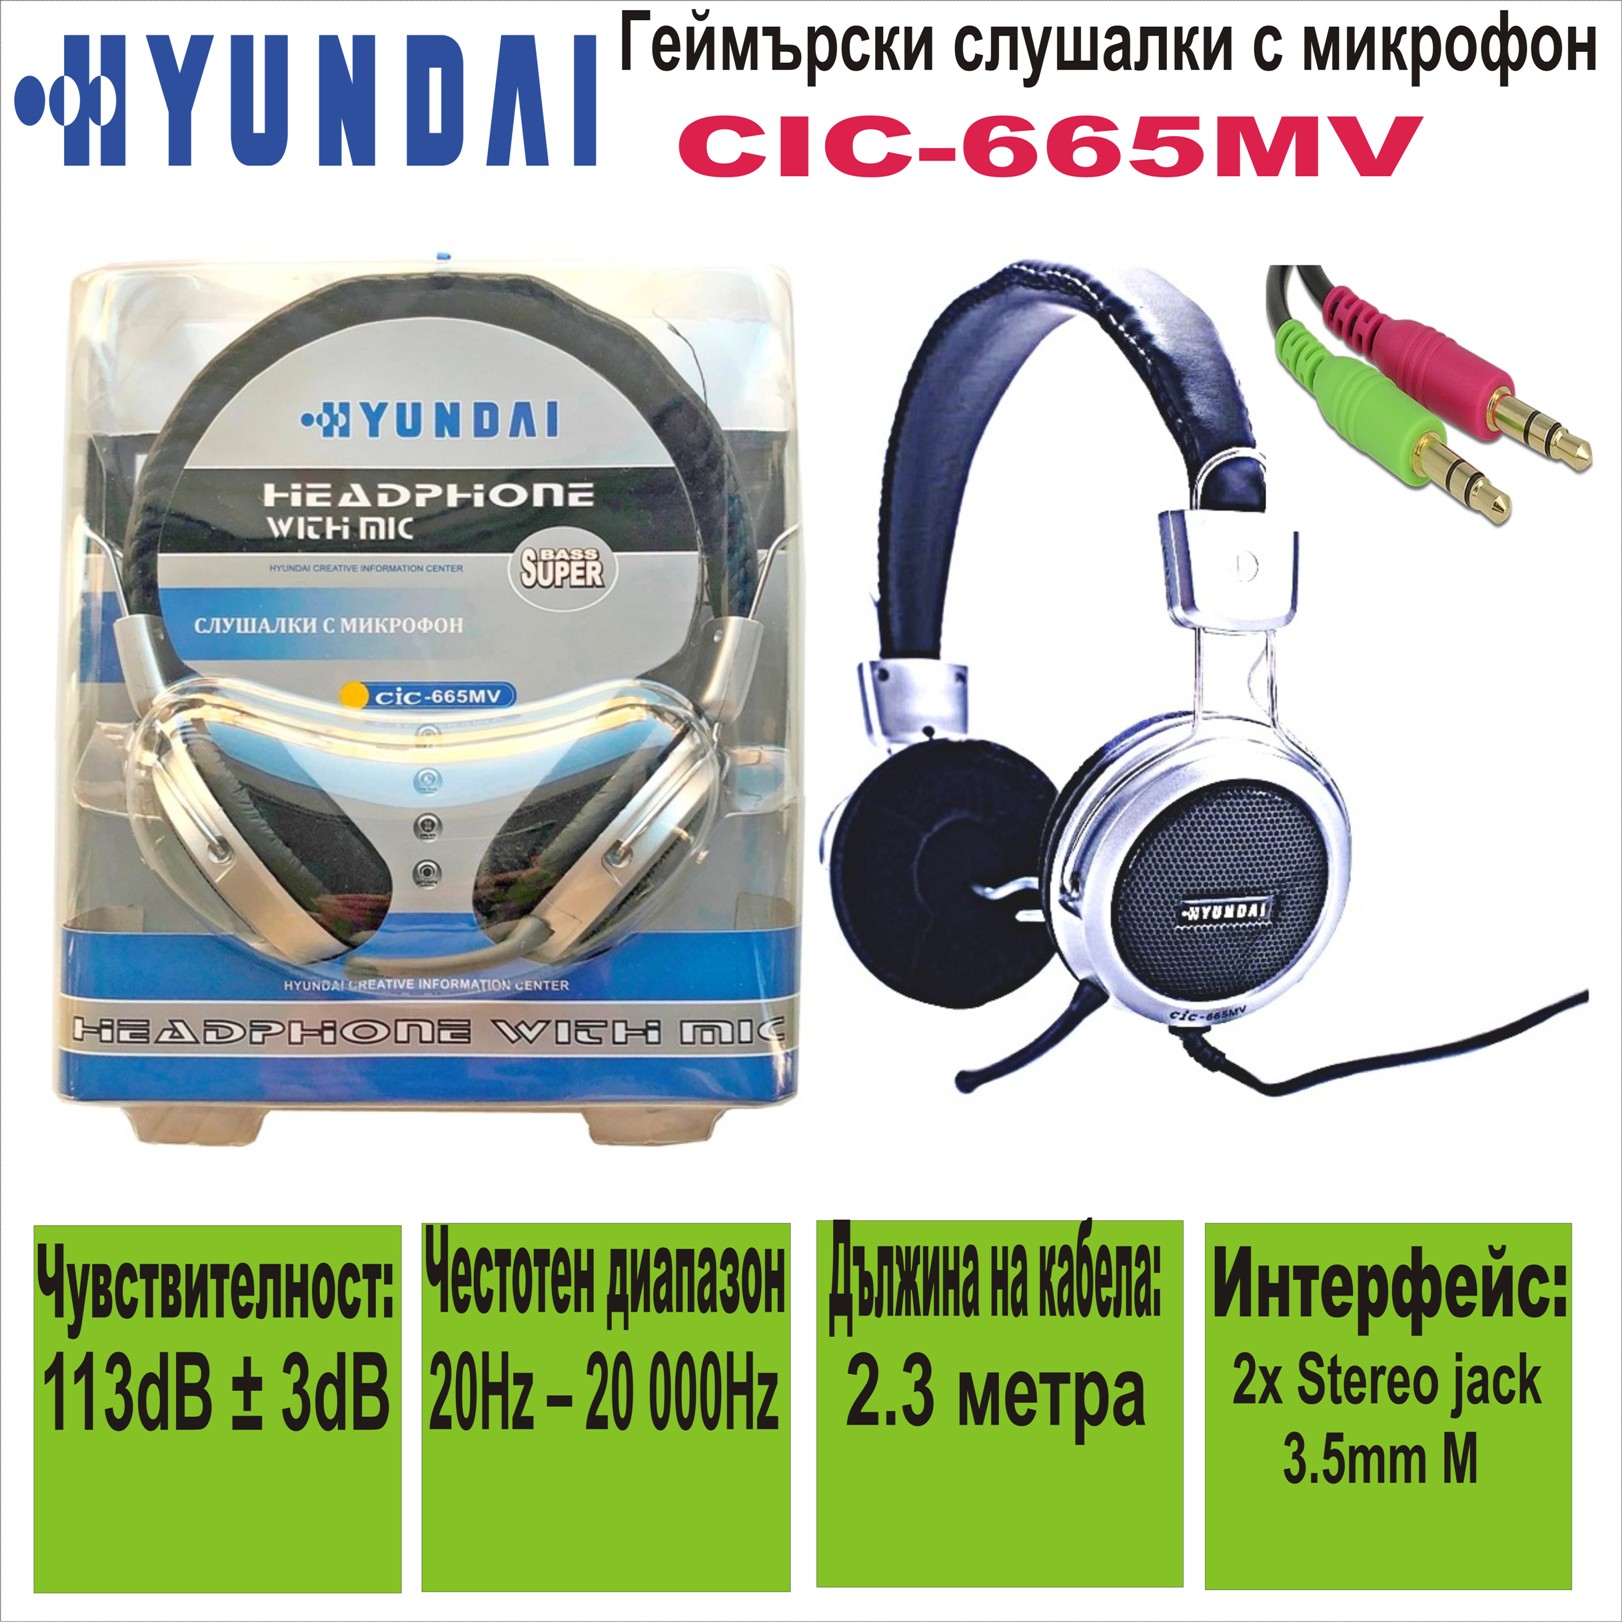 Геймърски слушалки Hyundai CIC-665MV